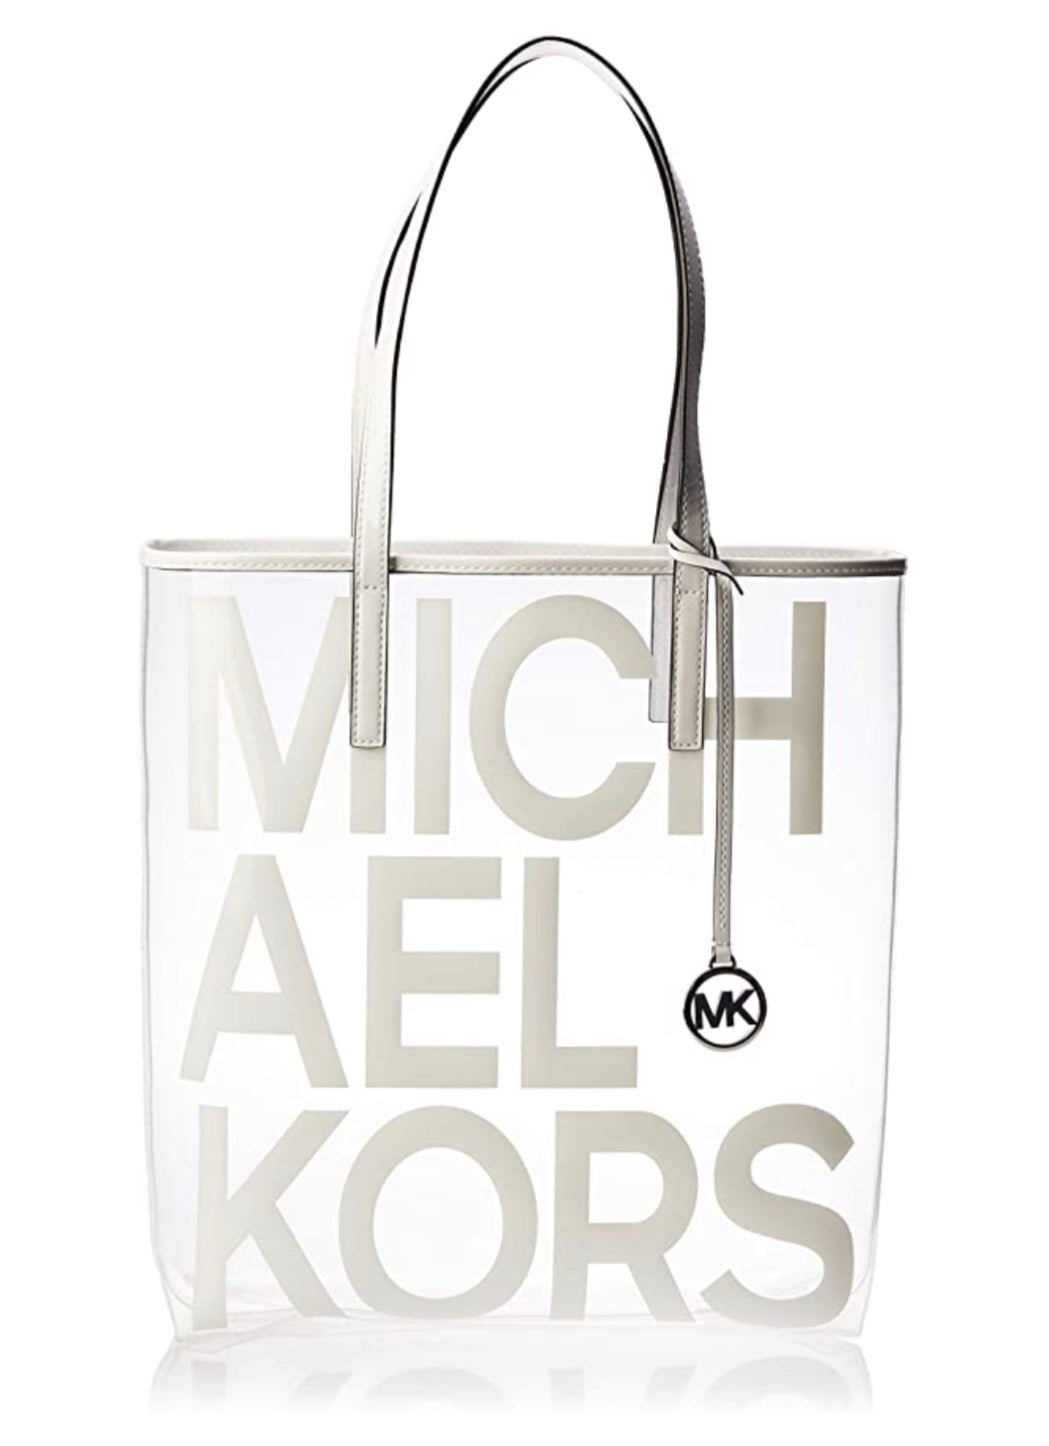 The Michael Large Graphic Logo Print PVC Tote Bag